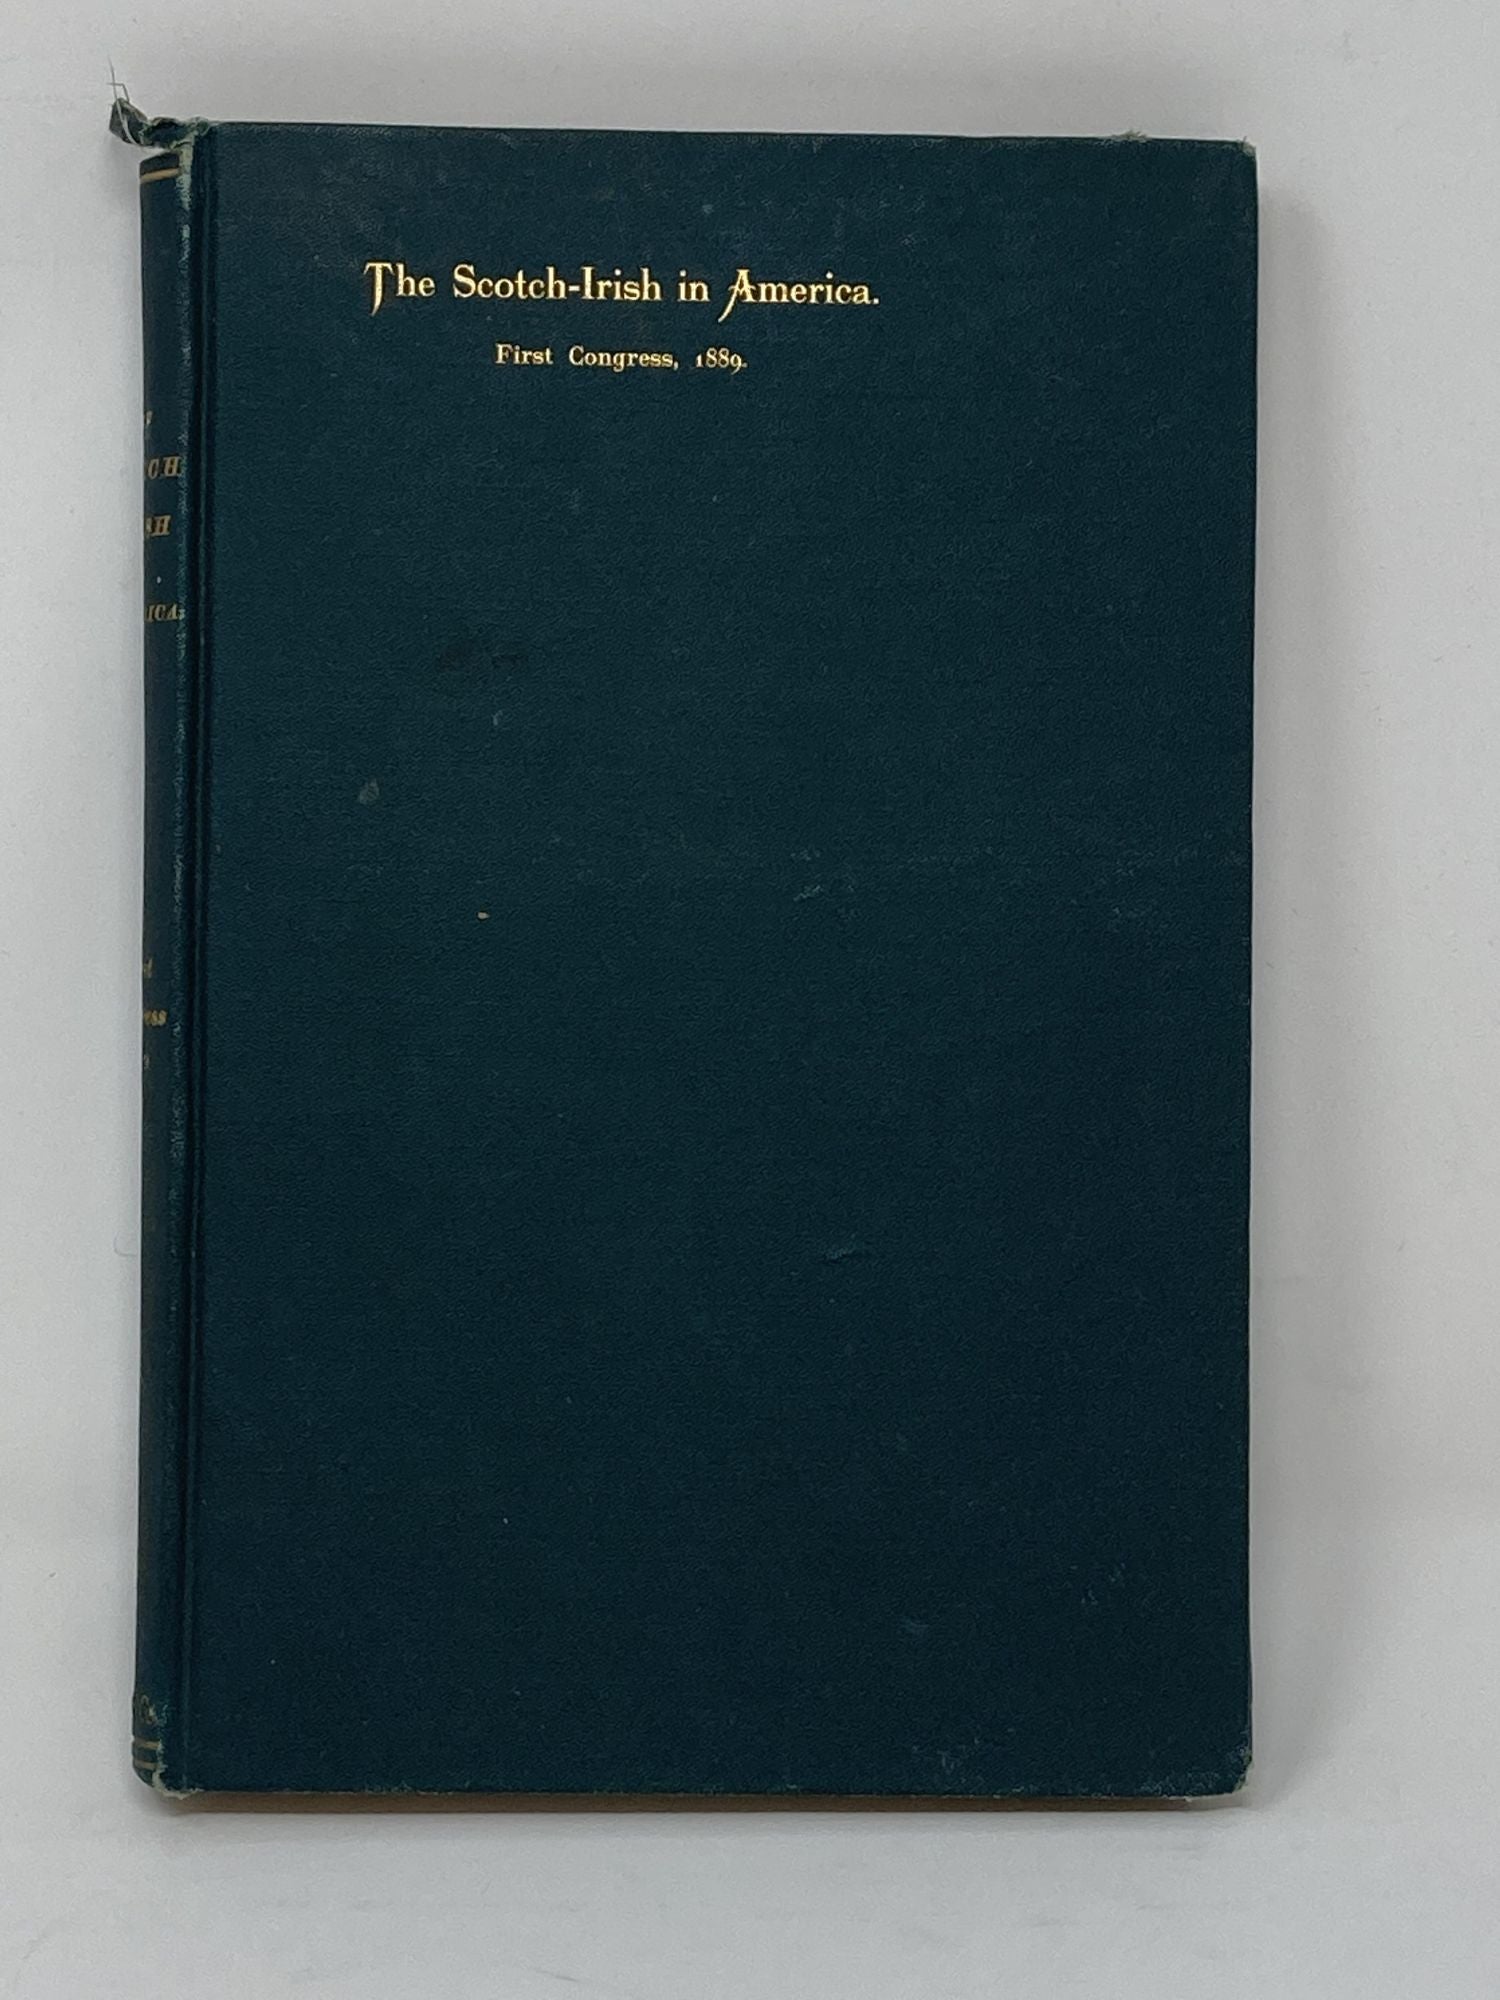 Scotch-Irish Society of America - The Scotch-Irish in America, Proceedings of the Scotch-Irish Congress at Columbia, Tennessee May 8-11, 1889